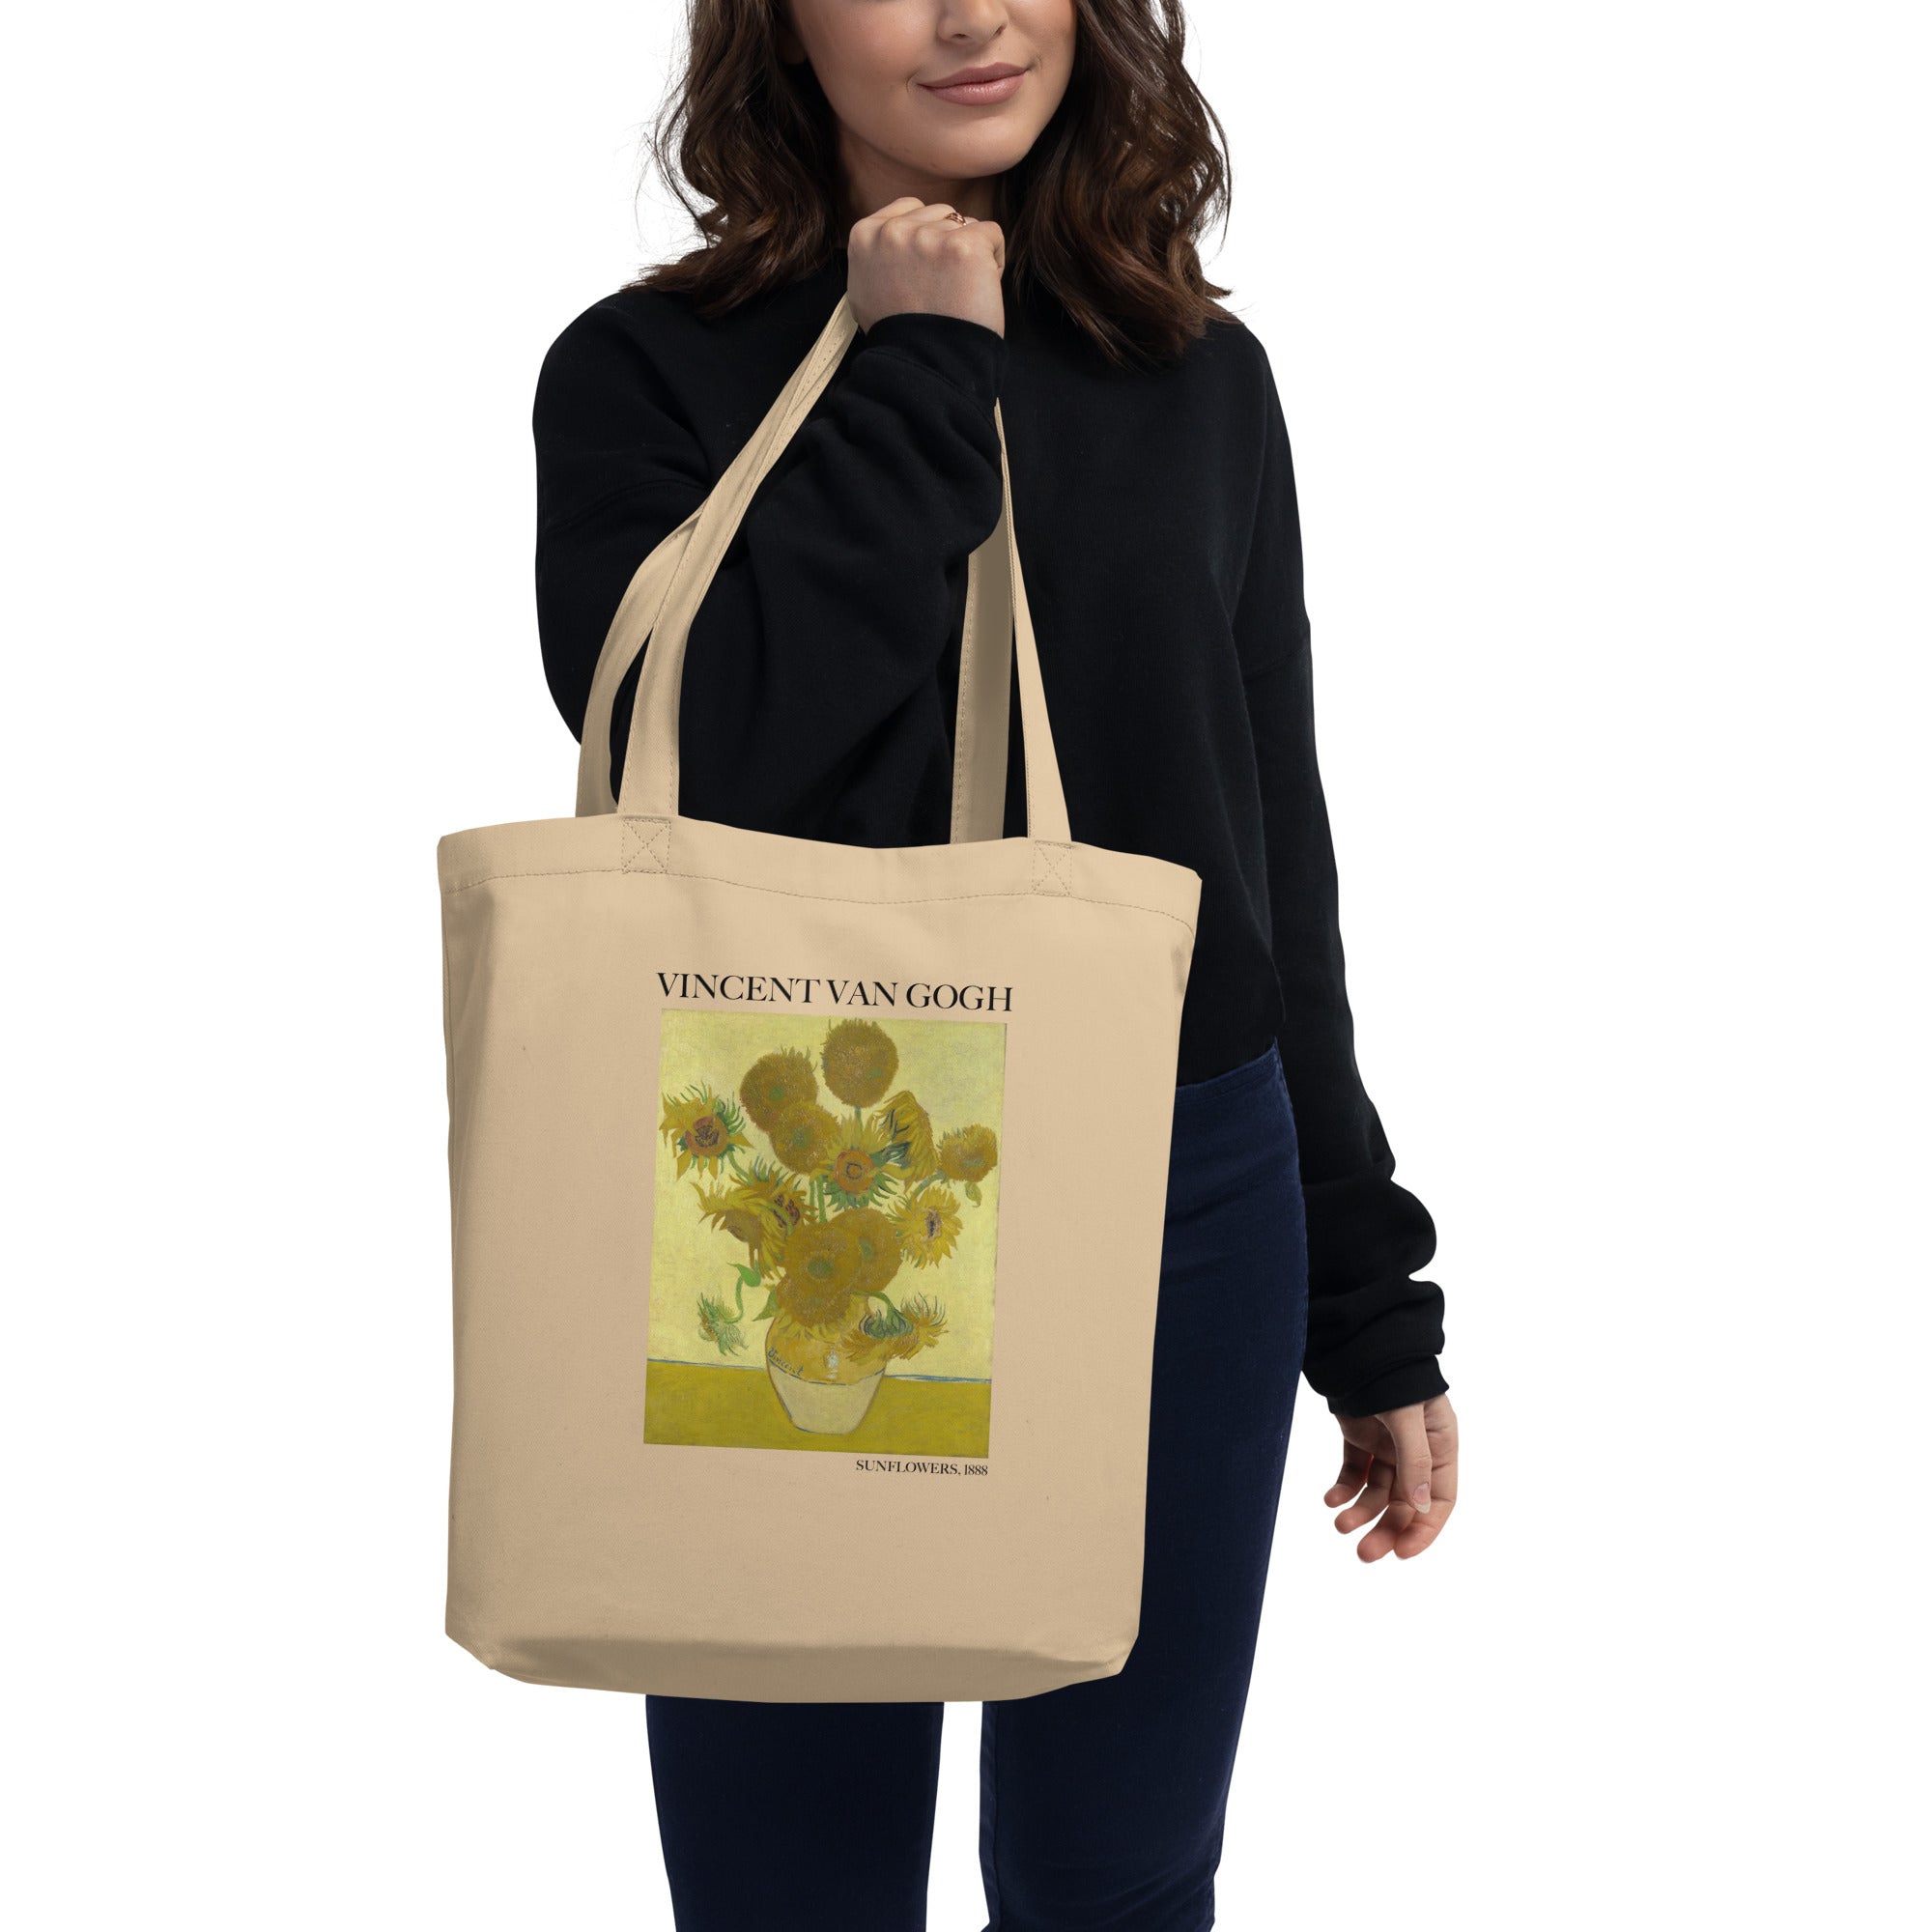 Vincent van Gogh 'Sunflowers' Famous Painting Totebag | Eco Friendly Art Tote Bag